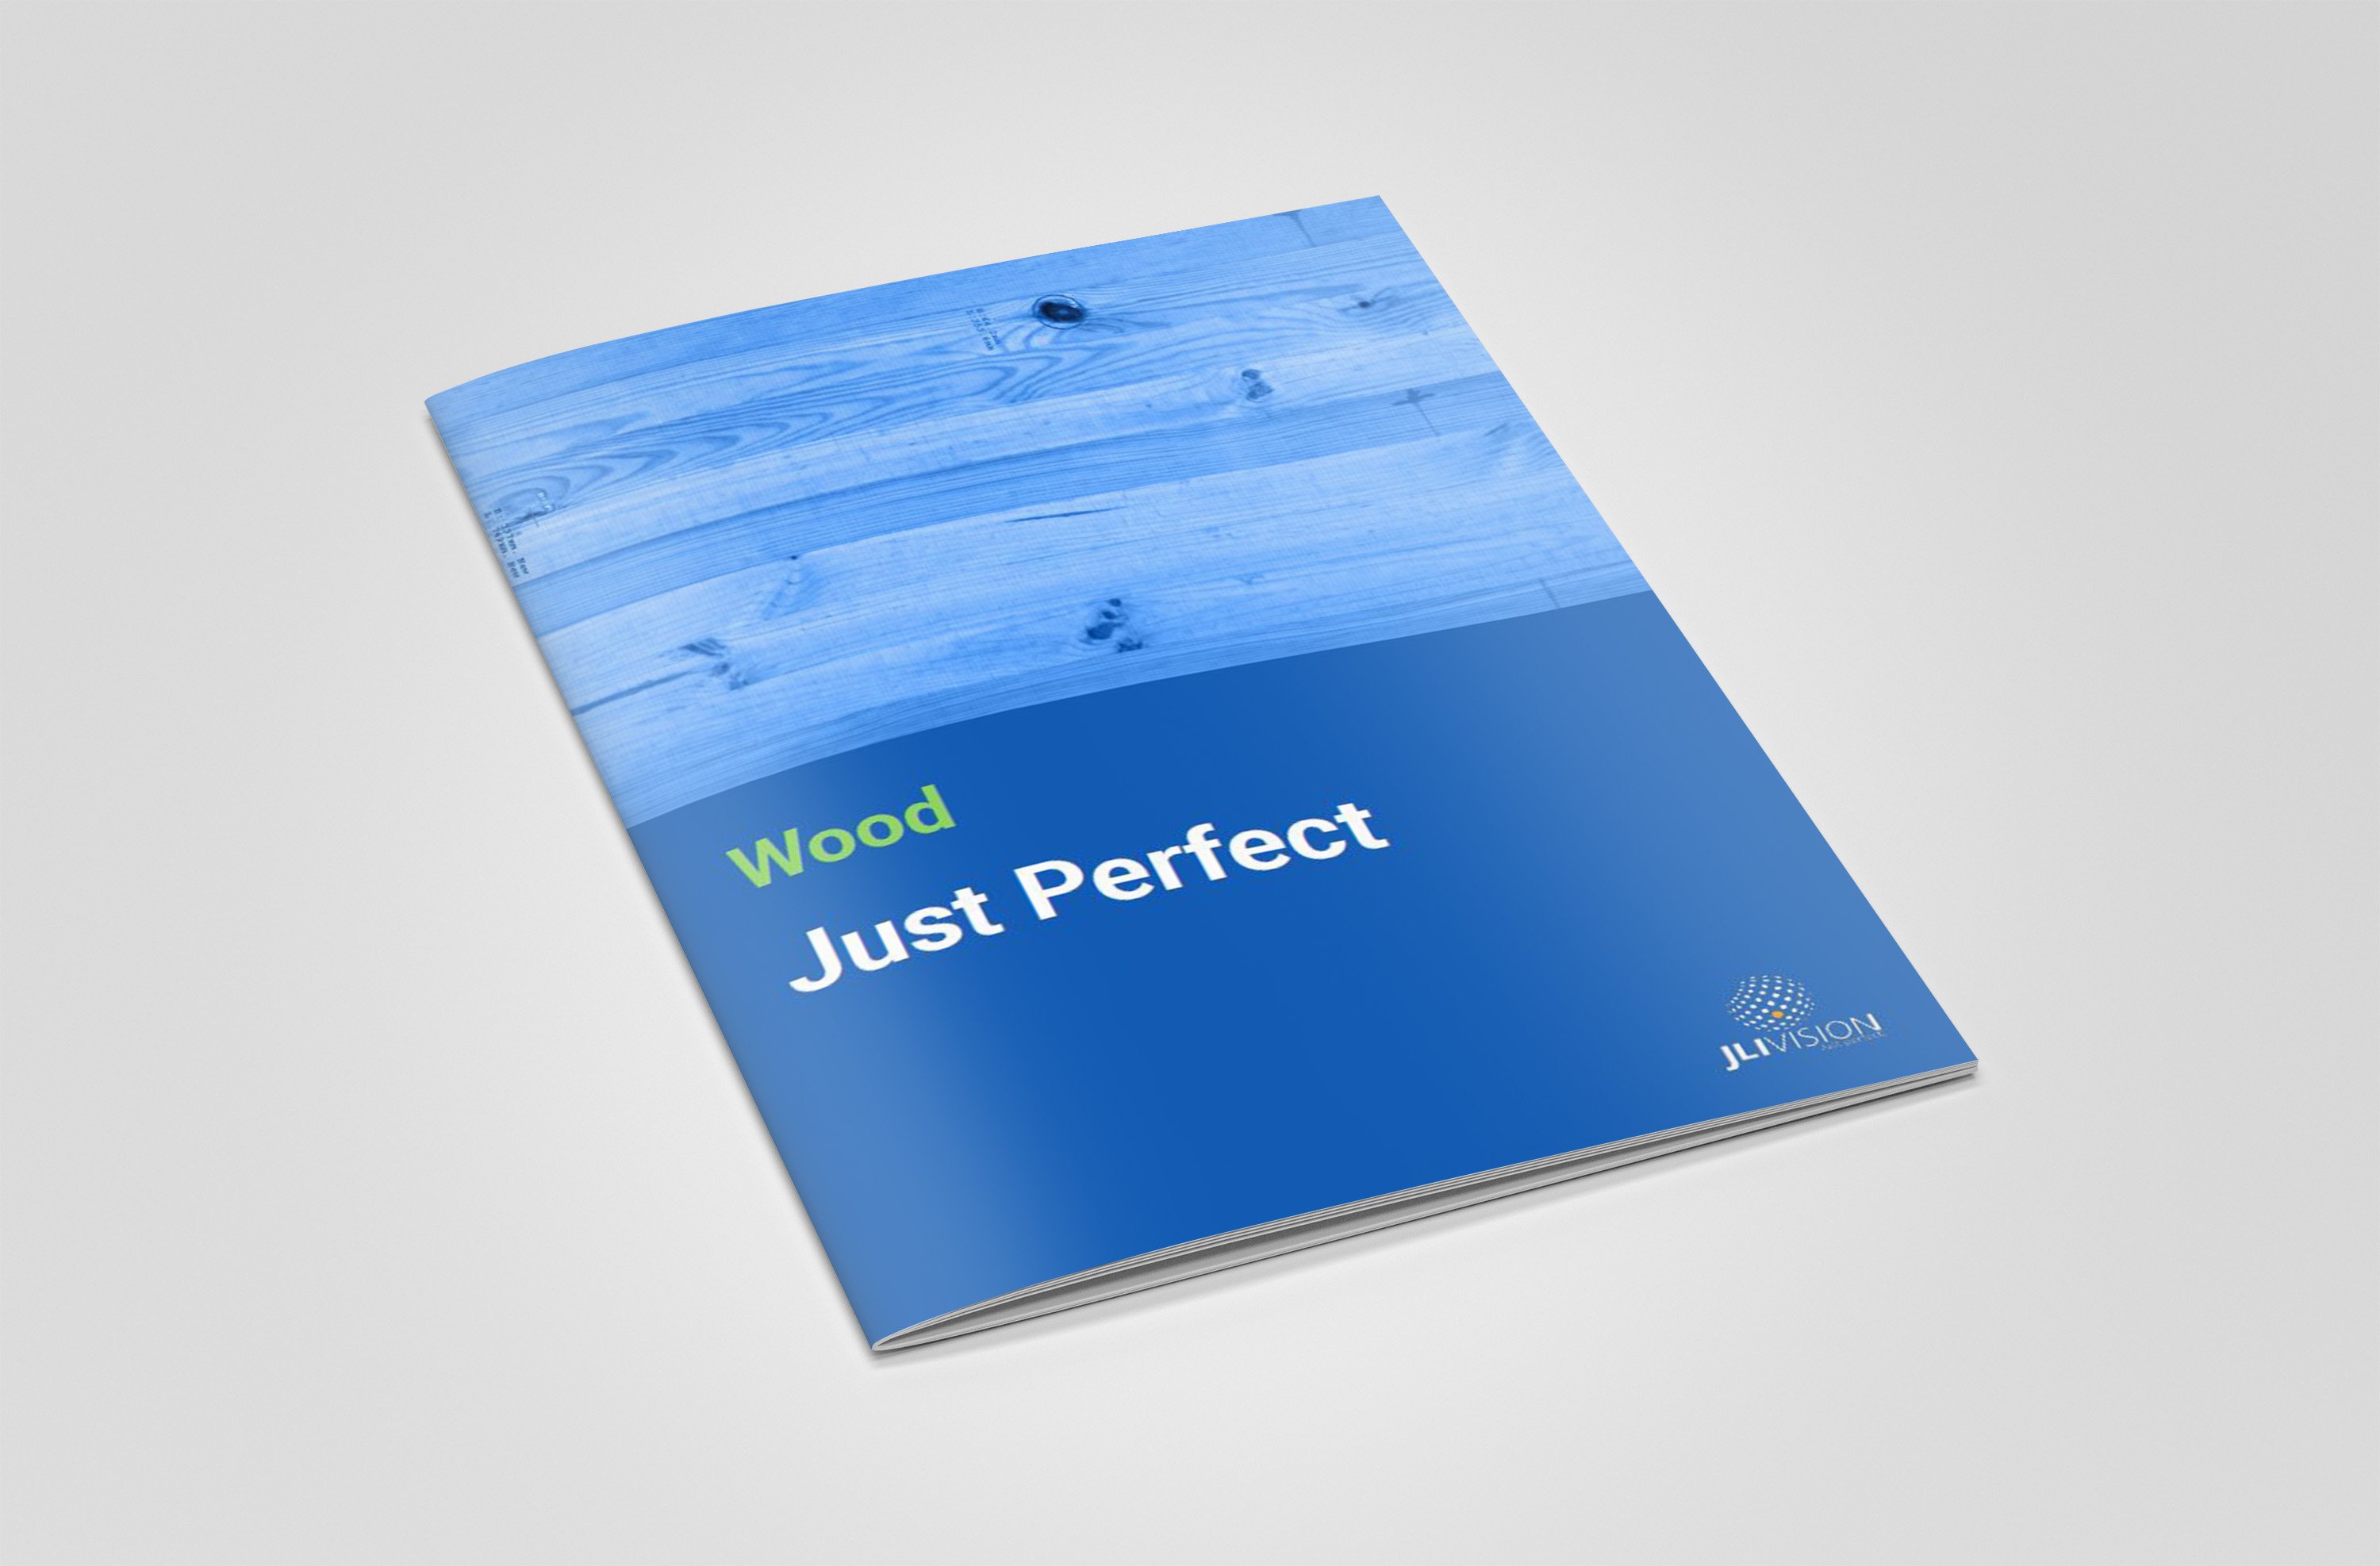 Wood Inspection brochure